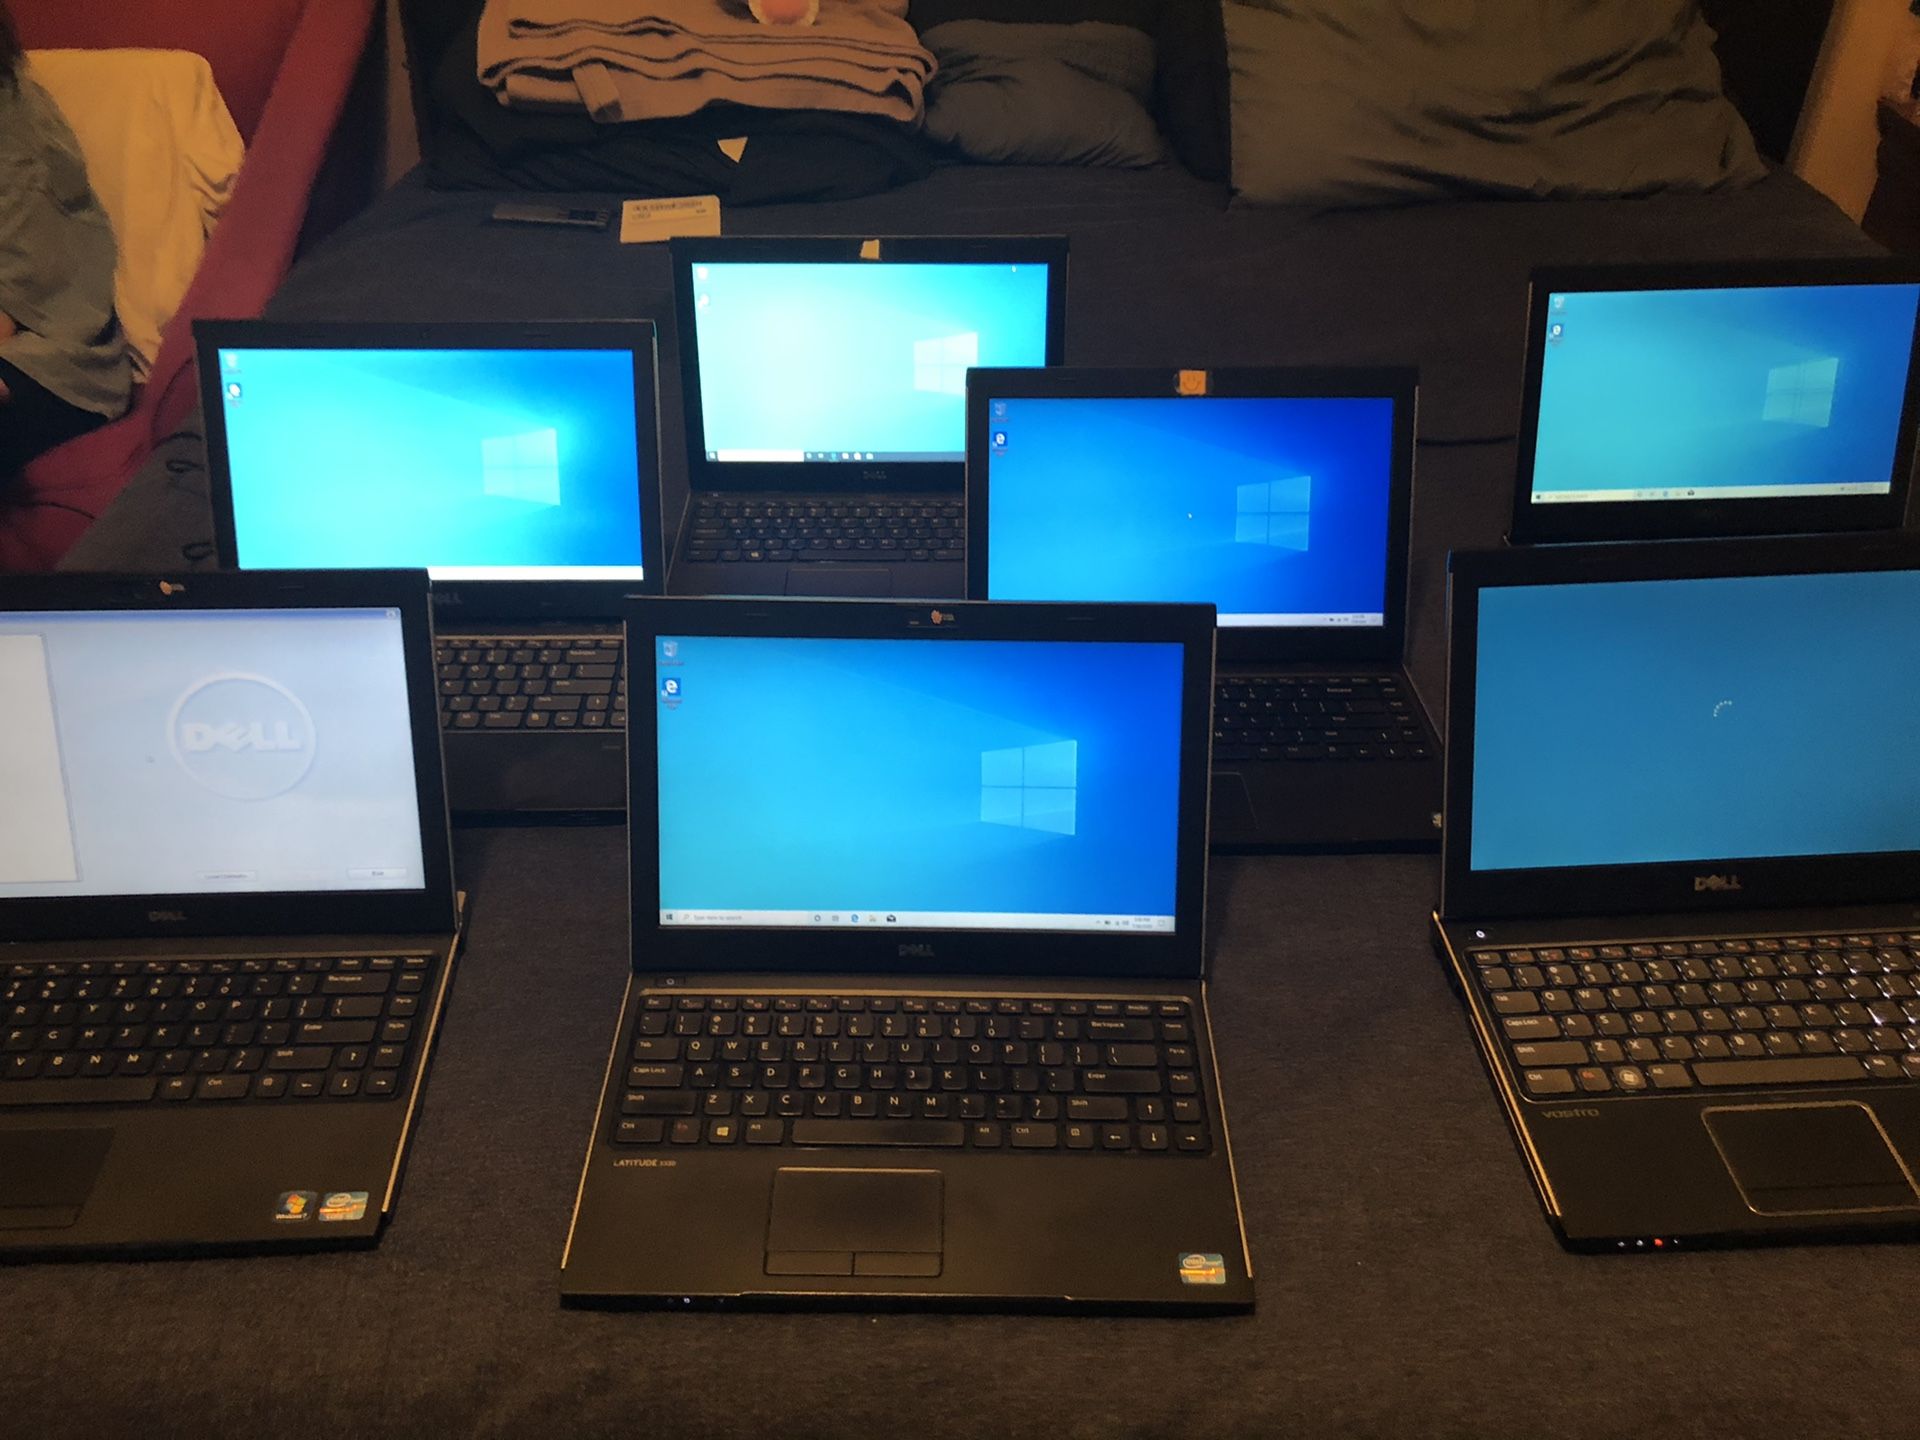 Dell laptops model 3330